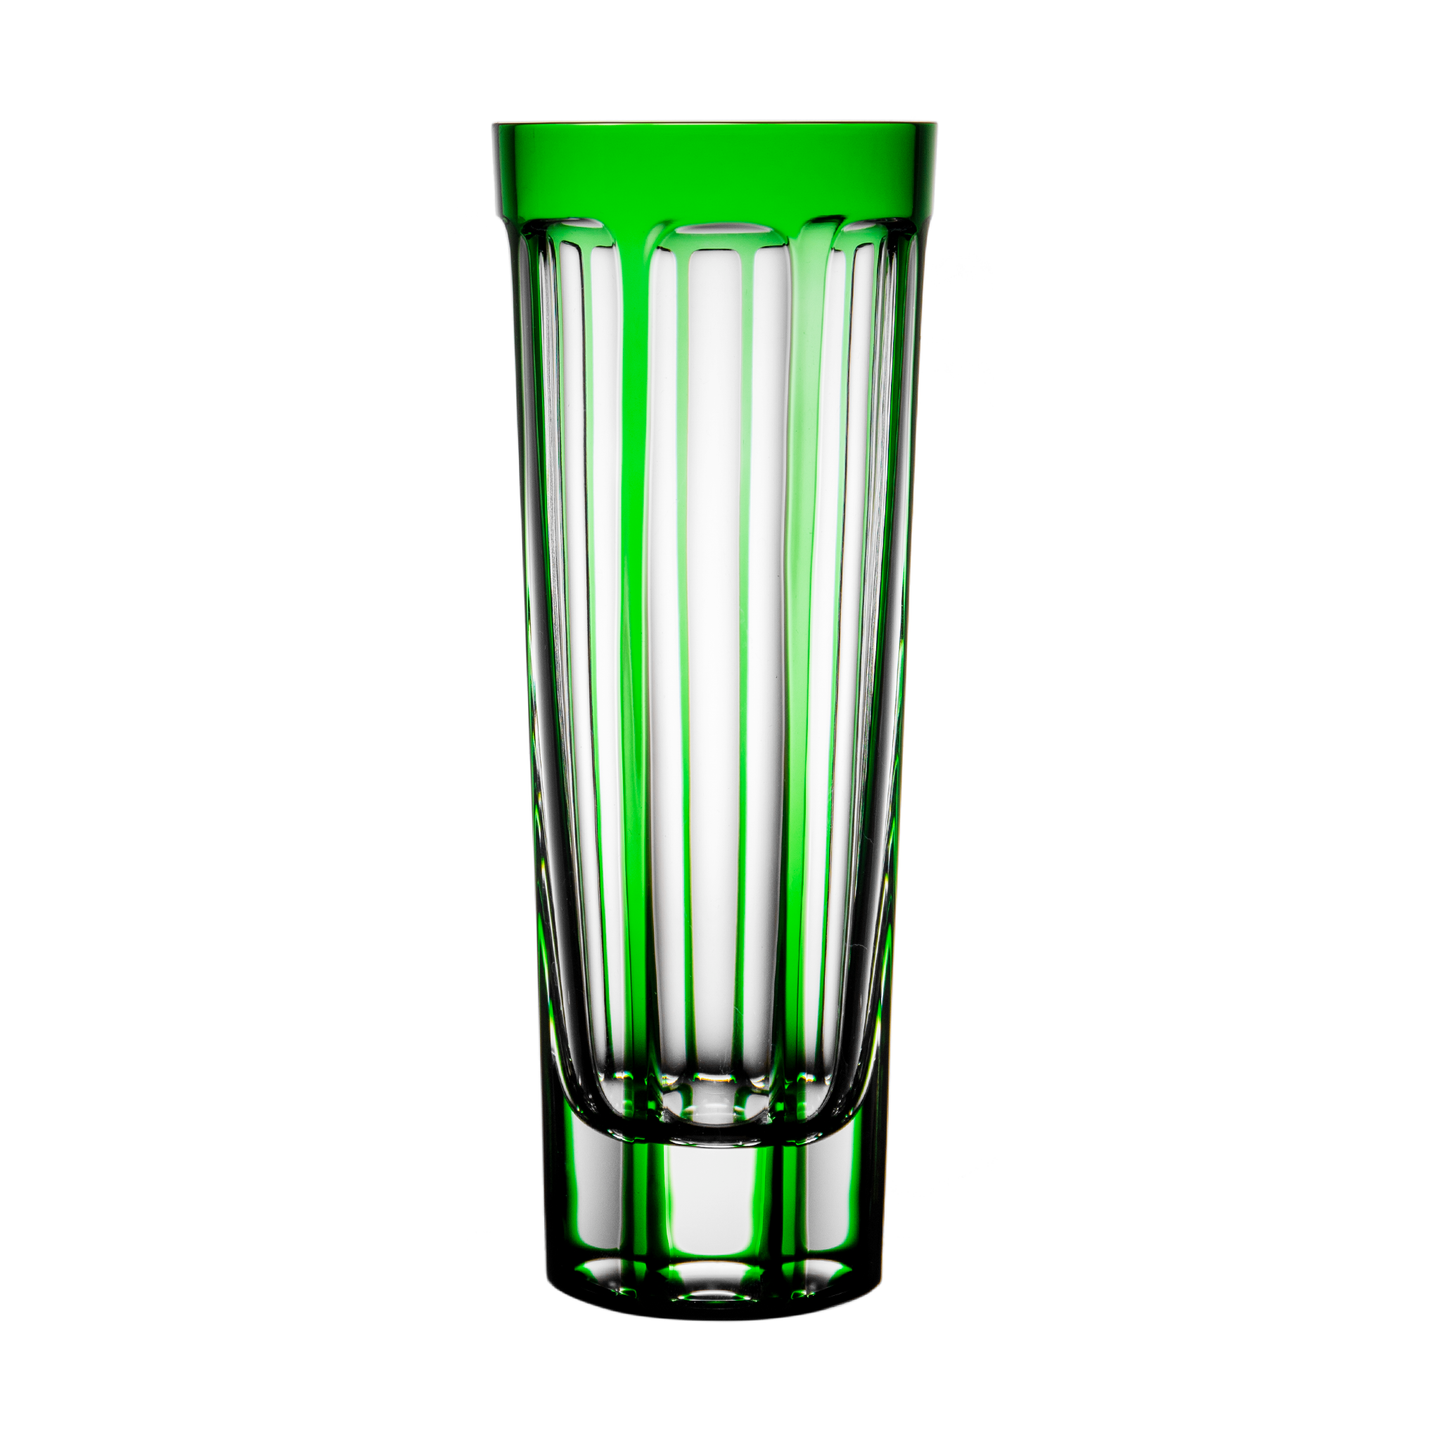 London Designer Emerald Green Vase 9.4 in